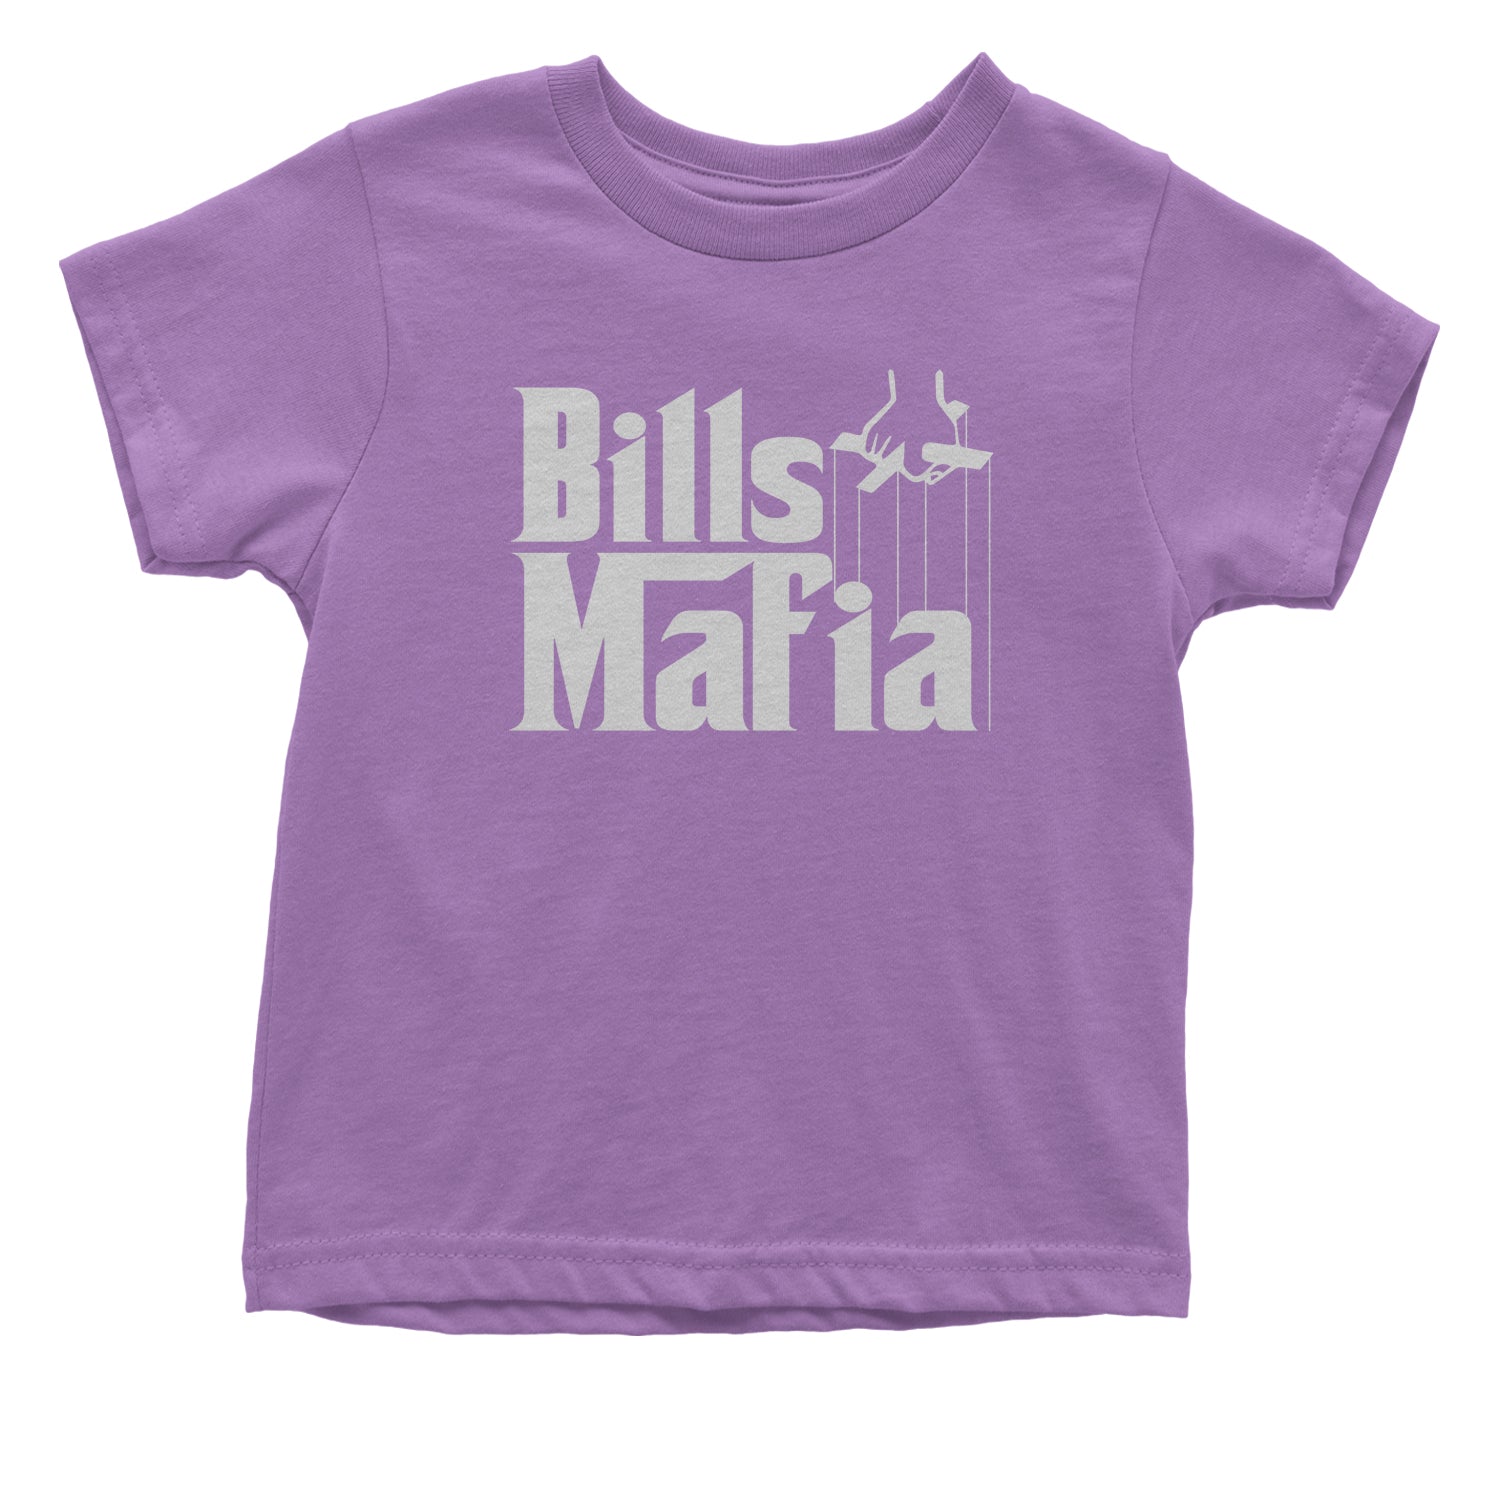 Mafia Bills Mafia Godfather Infant One-Piece Romper Bodysuit and Toddler T-shirt bills, fan, father, football, god, godfather, new, sports, team, york by Expression Tees